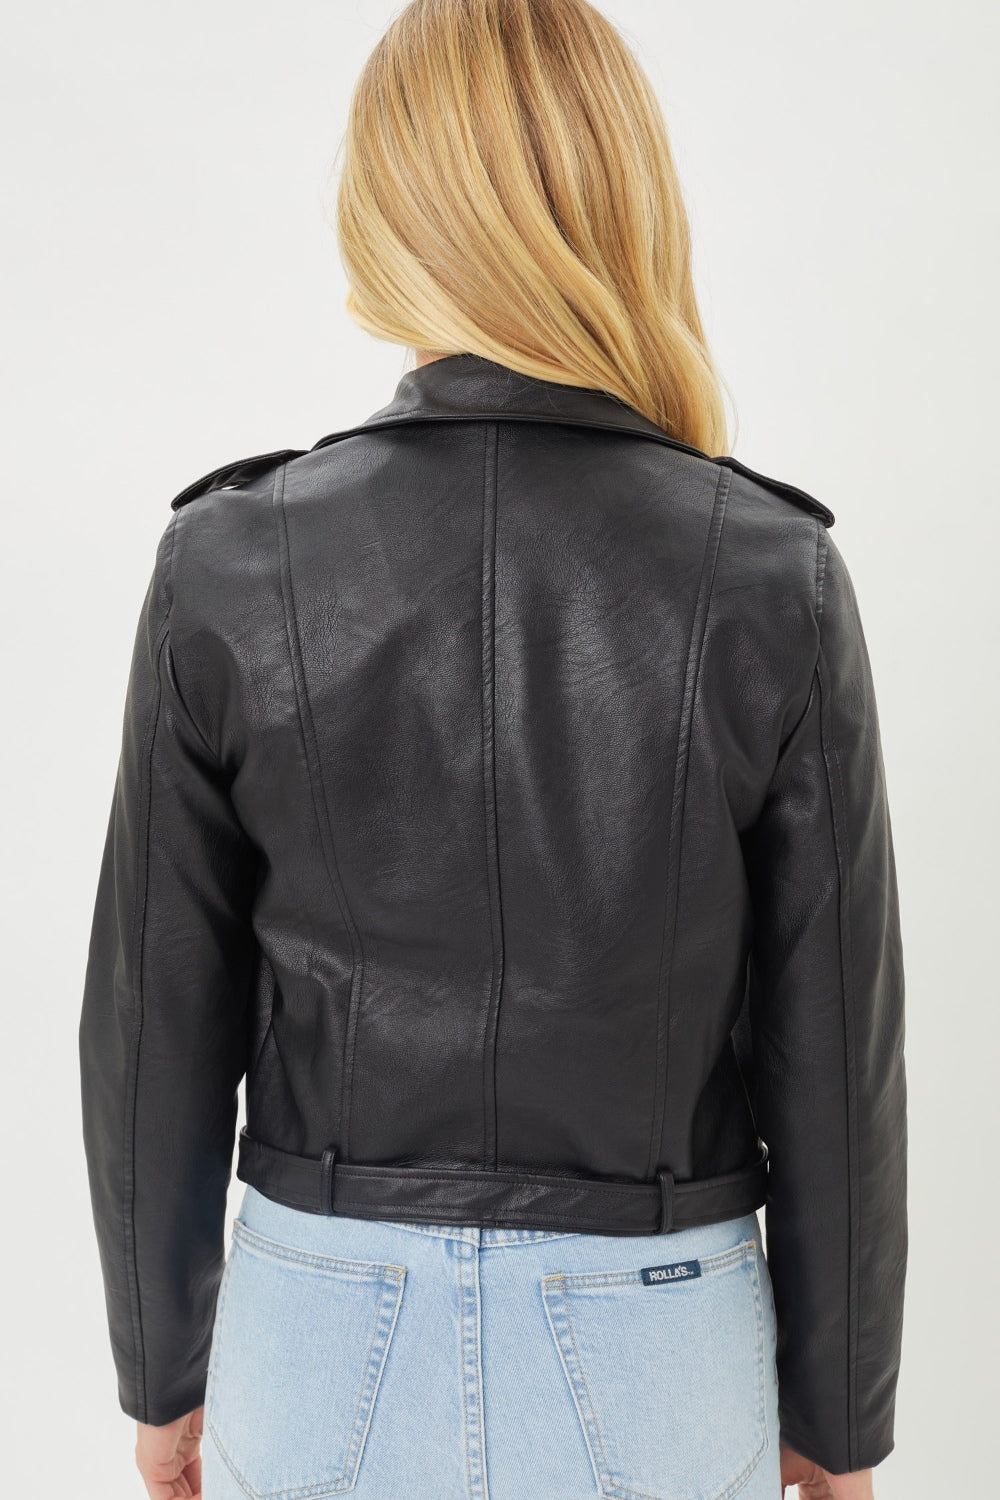 Black Faux Leather Biker Jacket - Inspired Eye Boutique